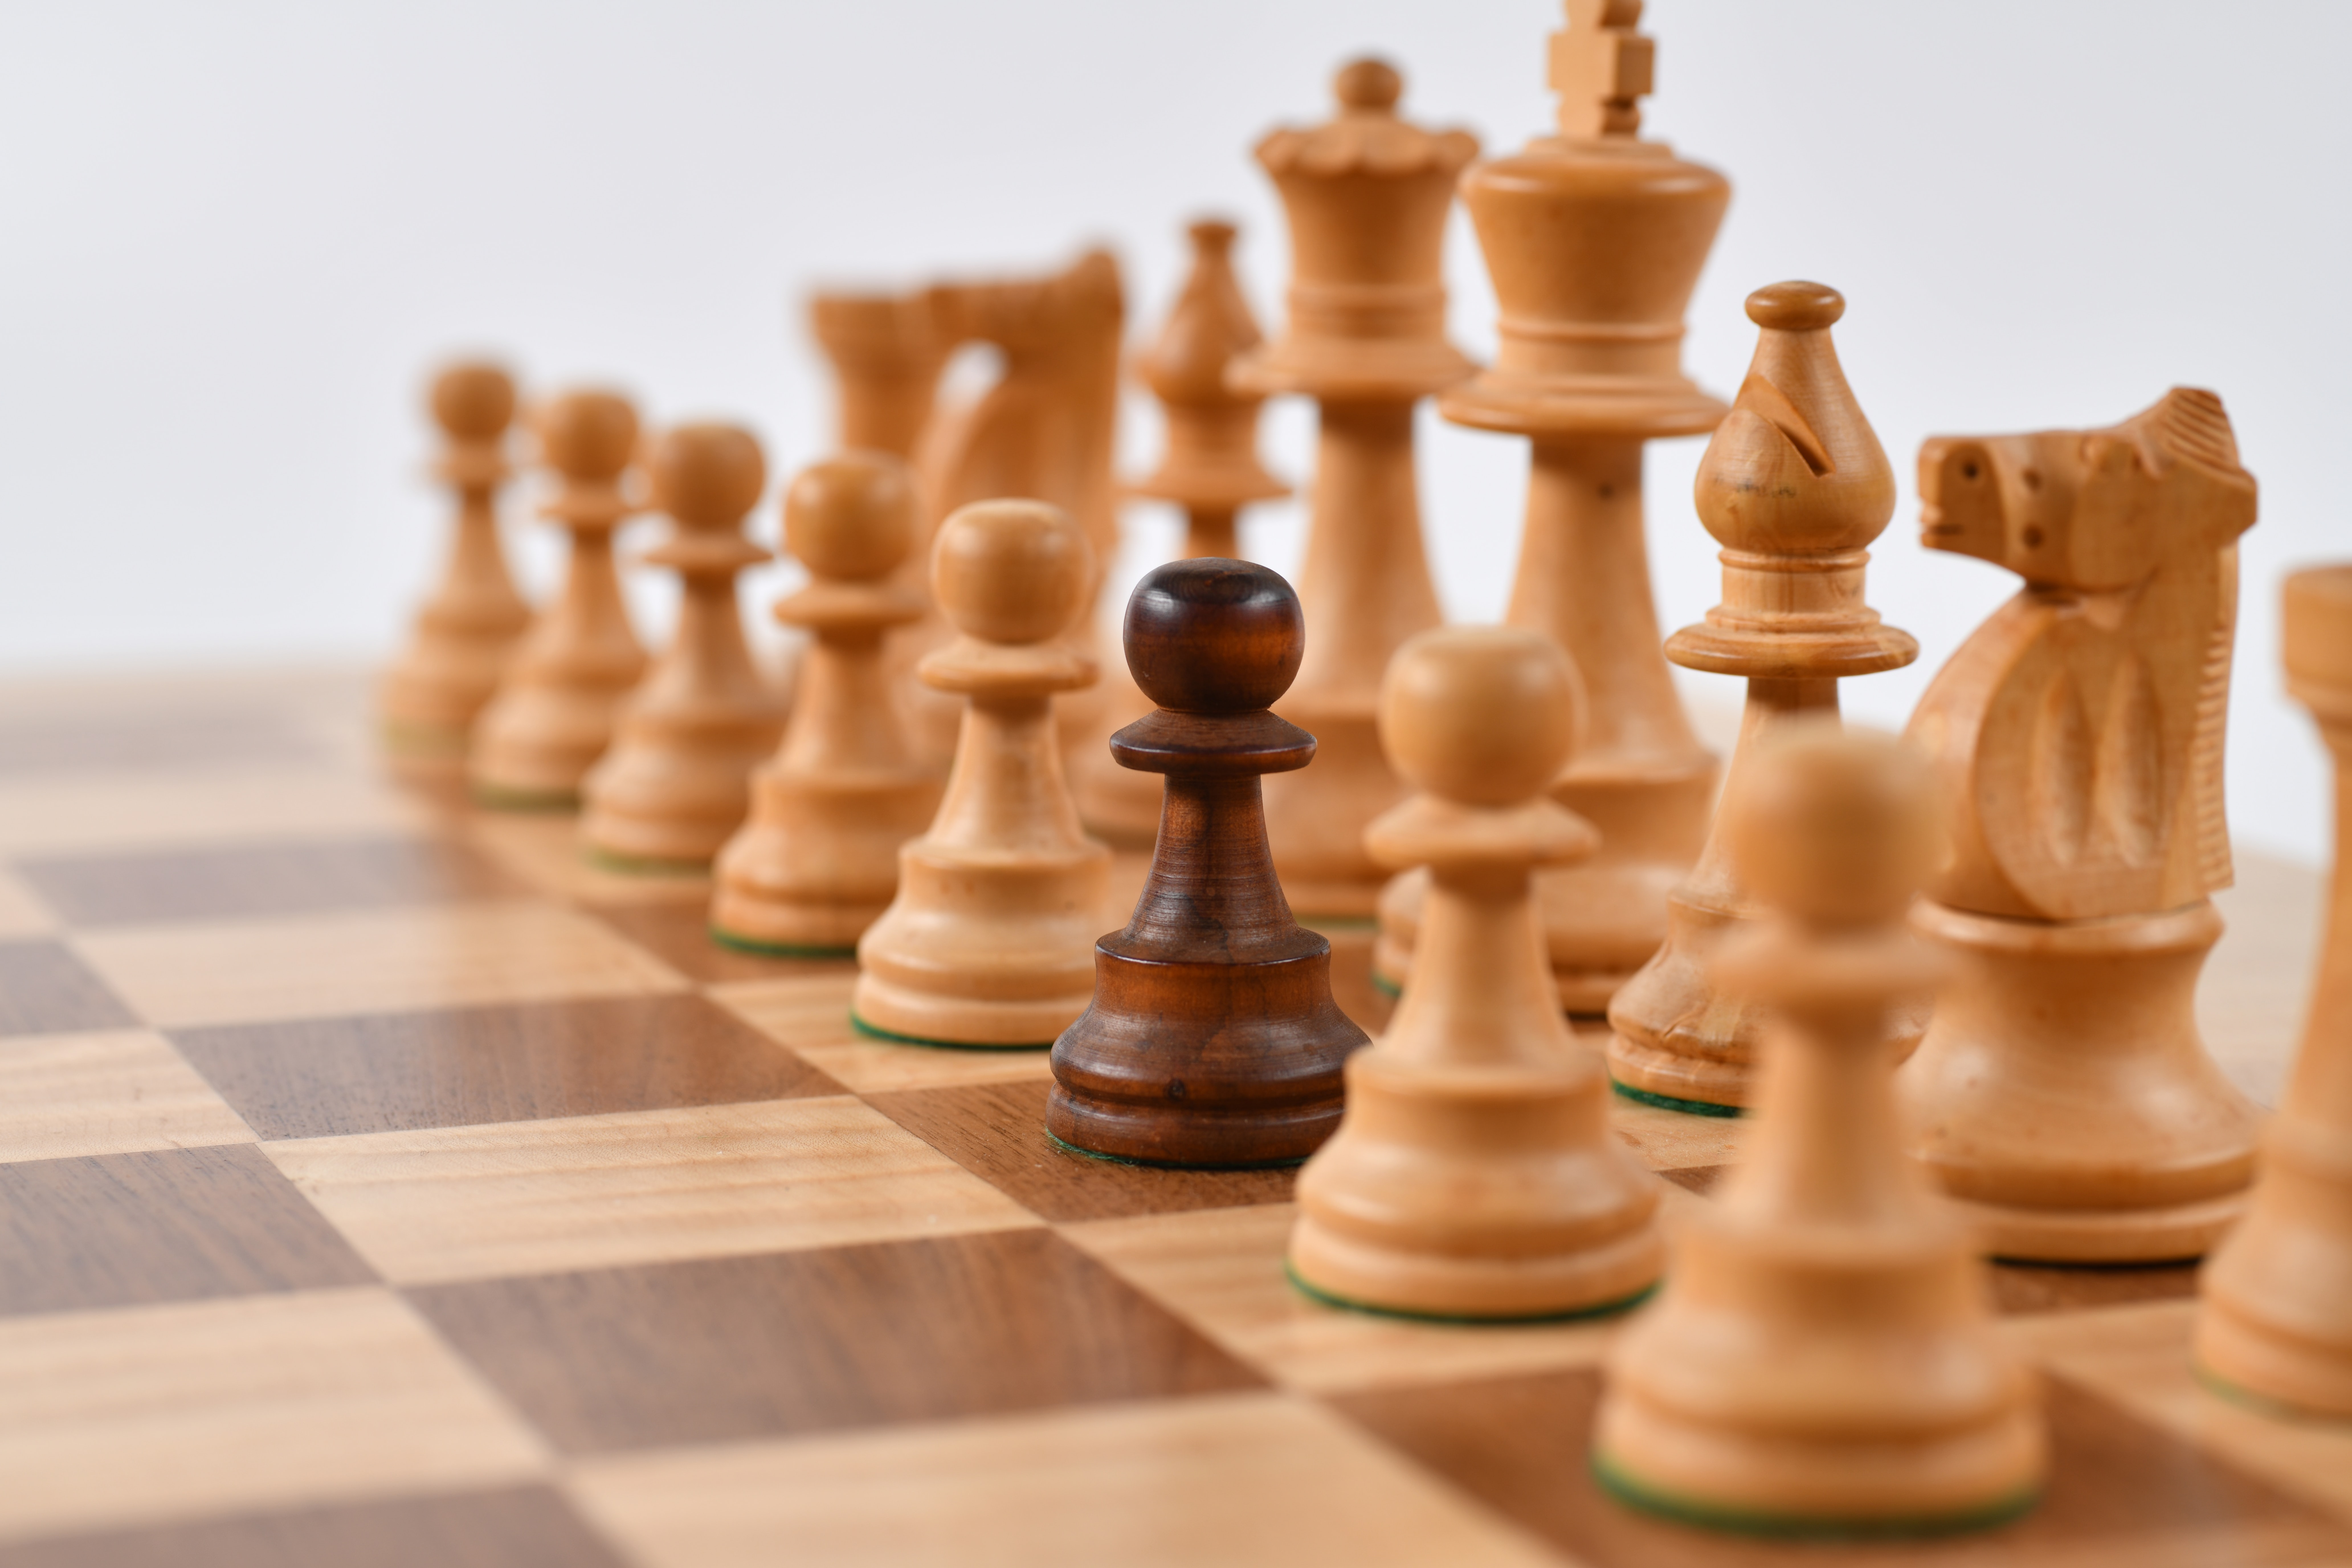 drugs society Spain chess ajedrezdrogas sociedad España 2020 estudio ICEERS